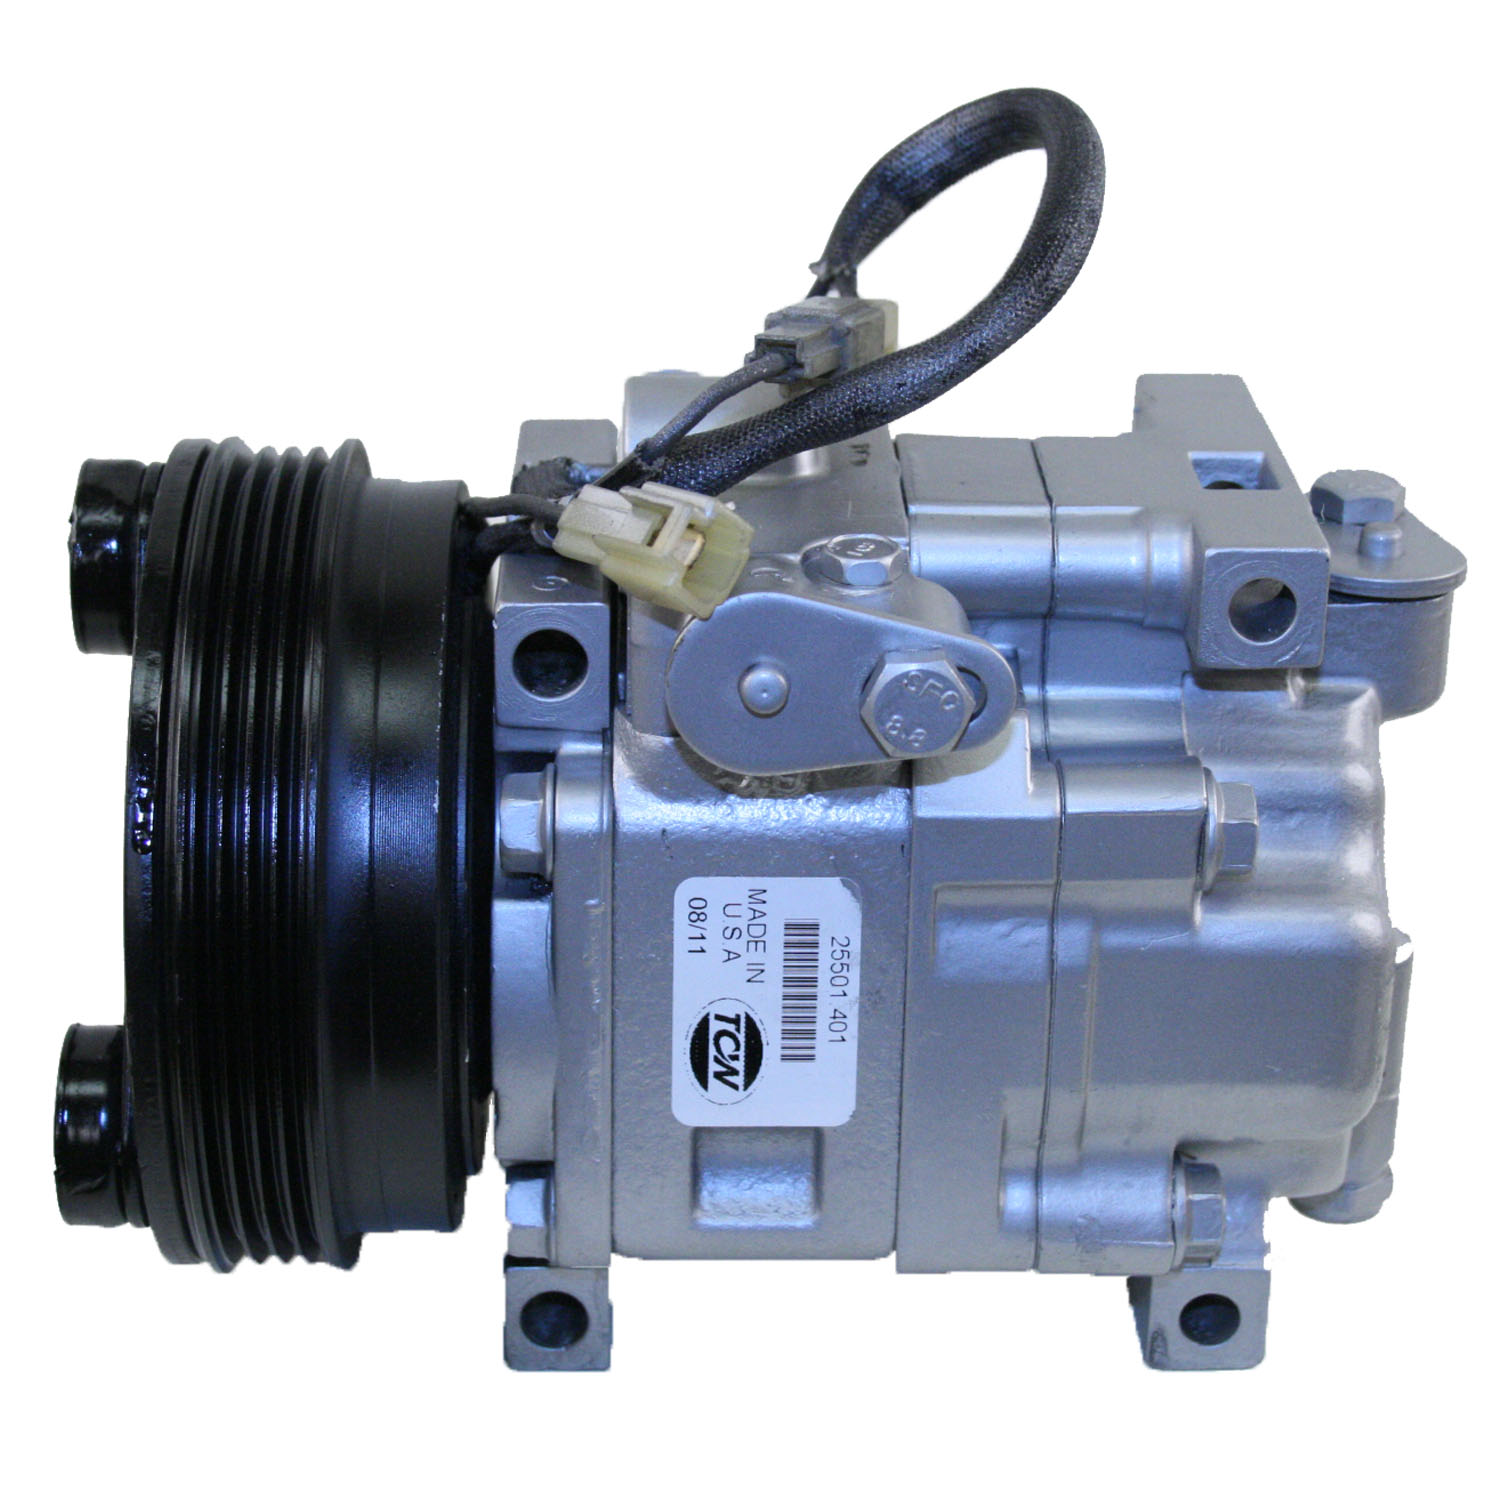 TCW Compressor 25501.401 Remanufactured